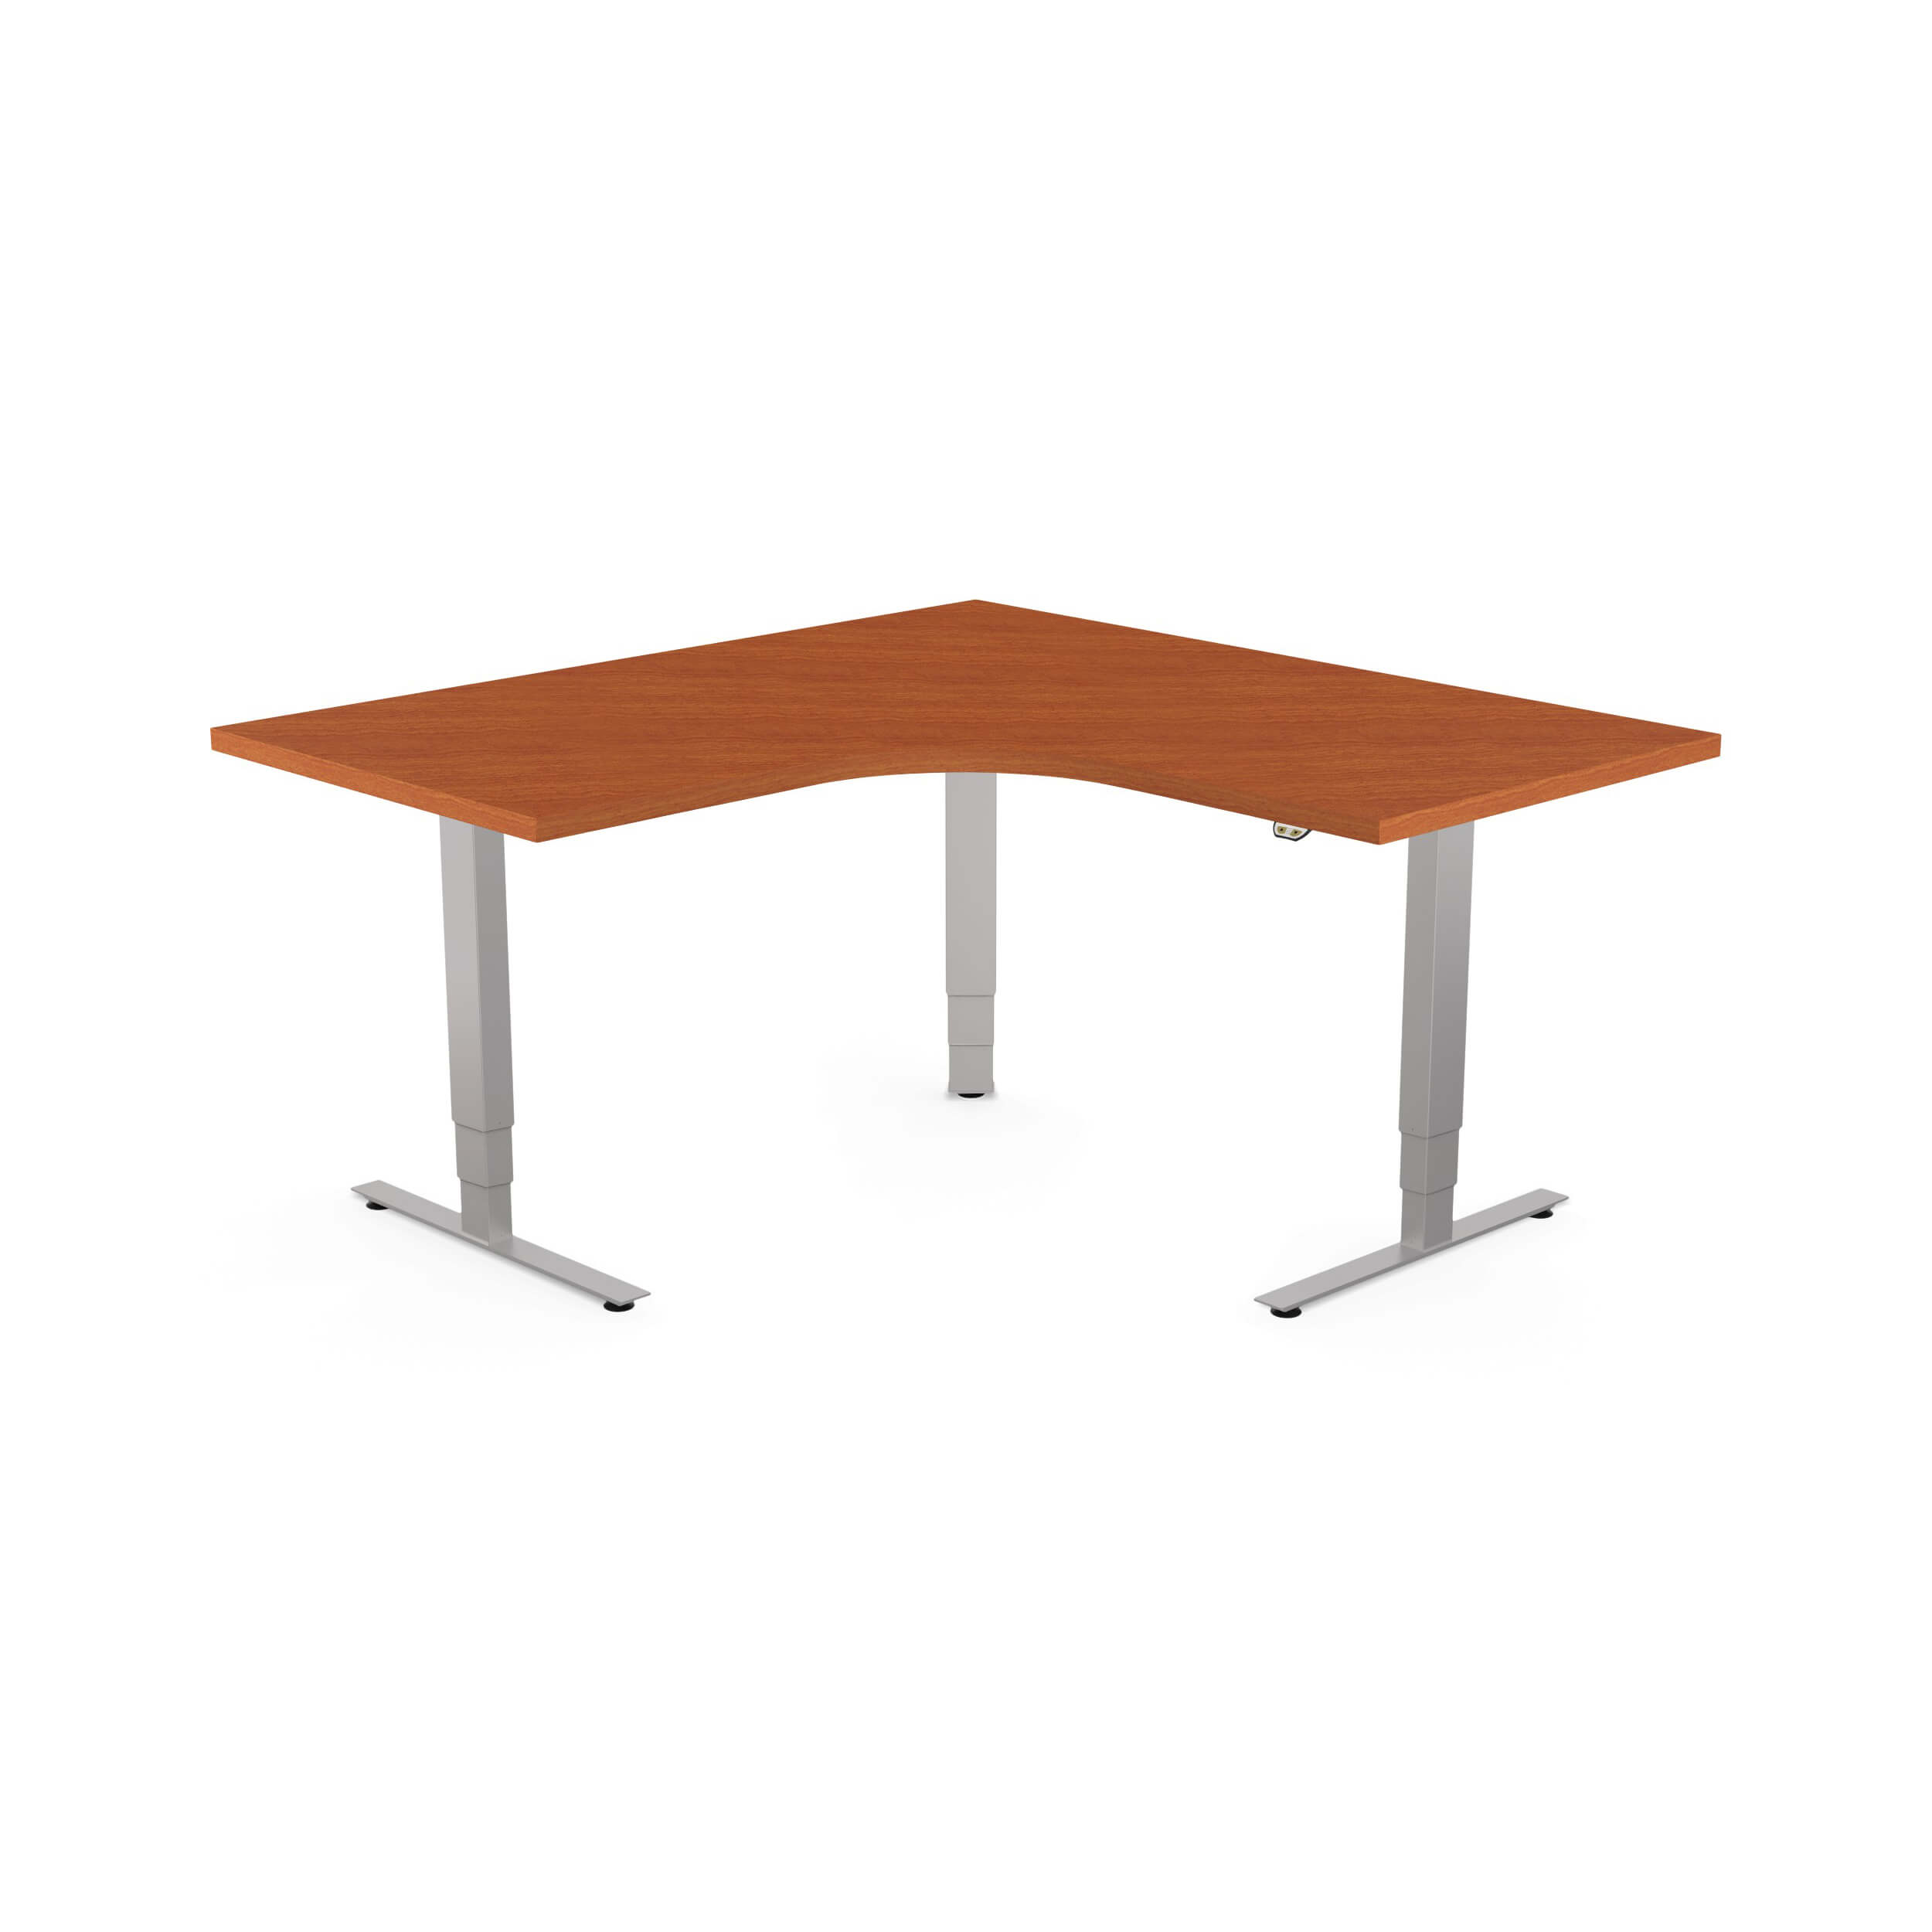 sit-stand-desk-adjustable-height-table.jpg